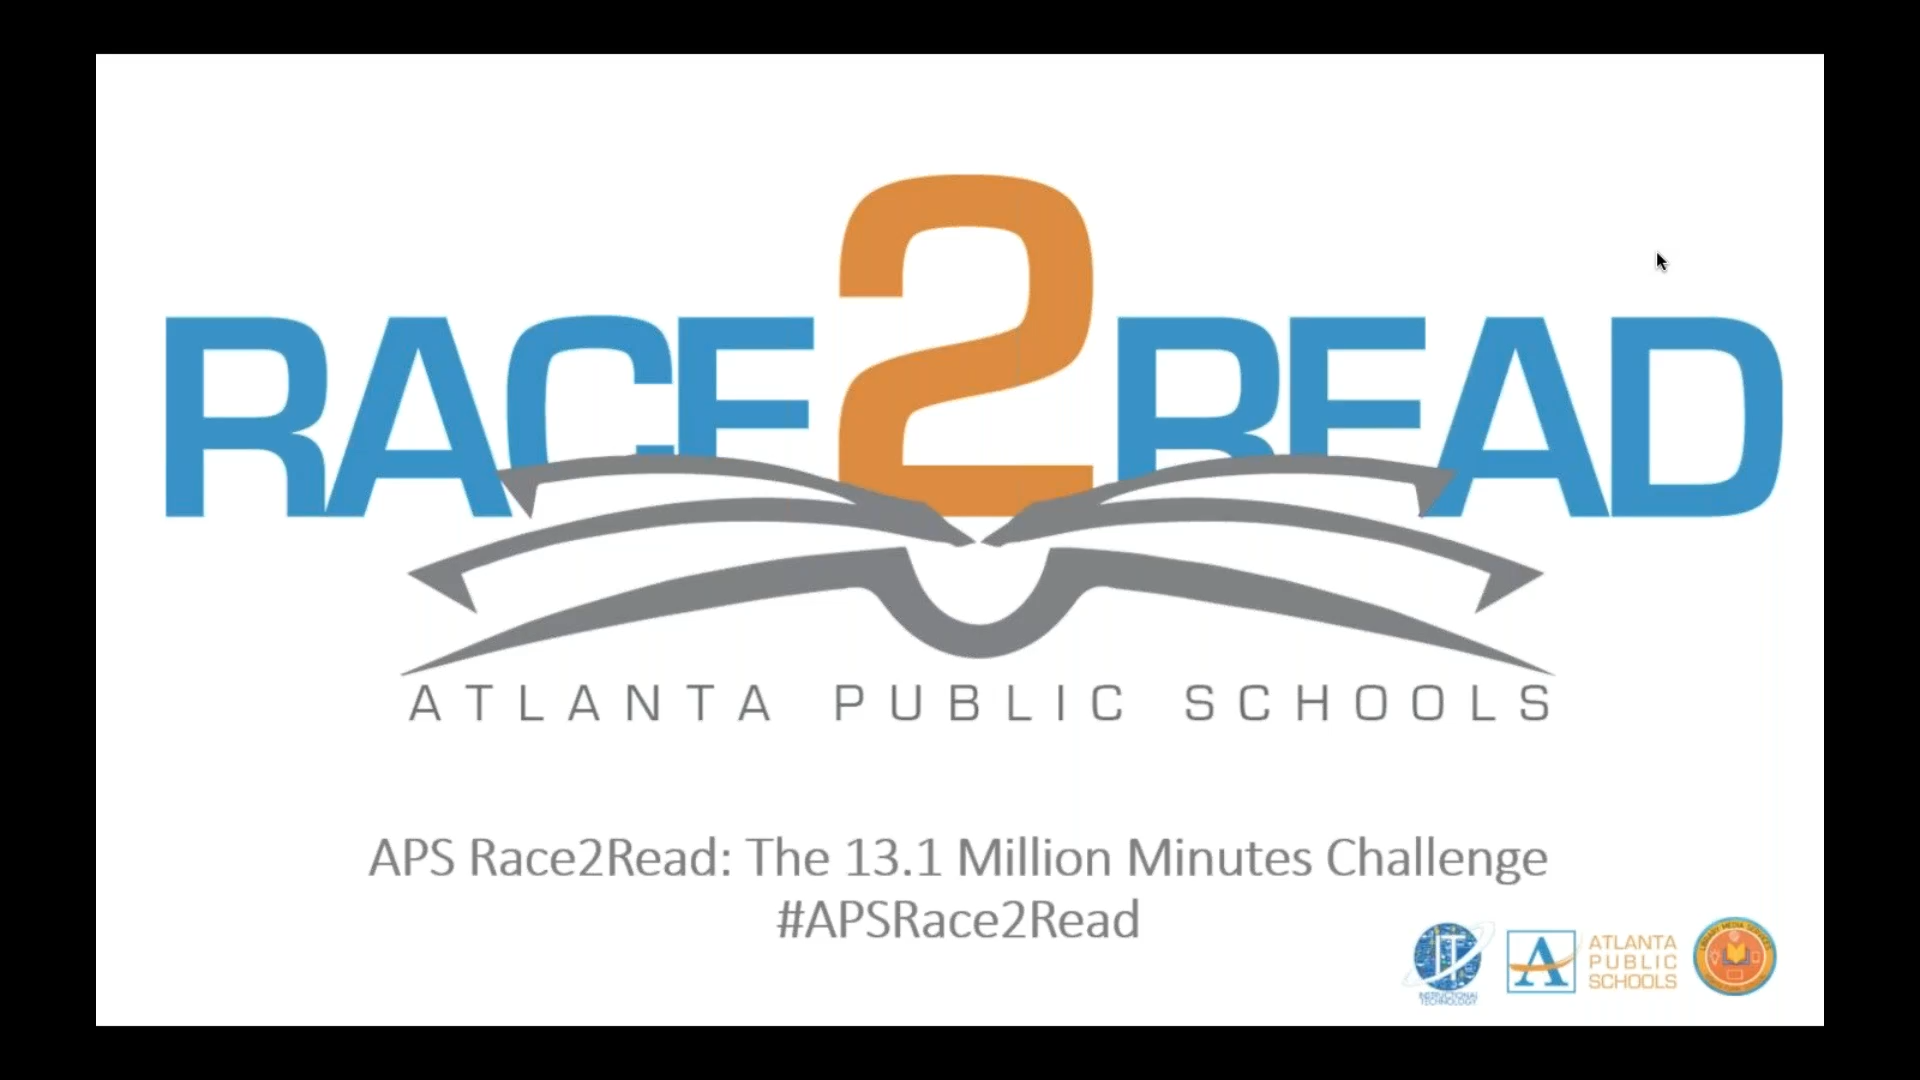 Atlanta Public Schools: The Race2Read 13.1 Million Minutes Challenge